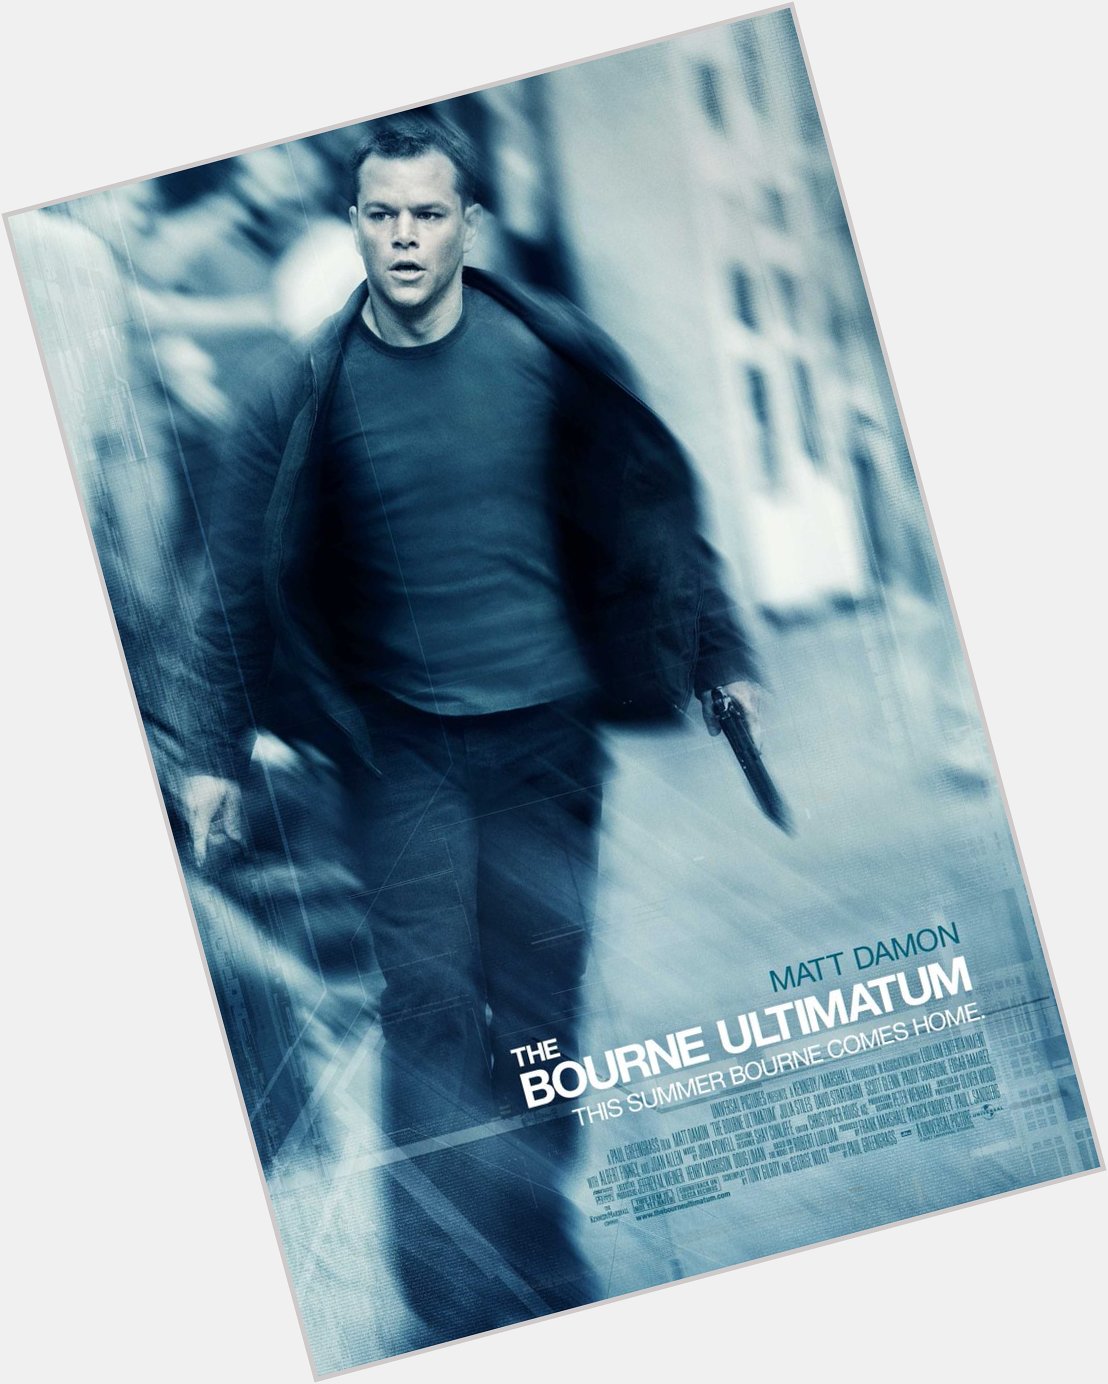 Happy Birthday to Paul Greengrass director of The Bourne Ultimatum. 